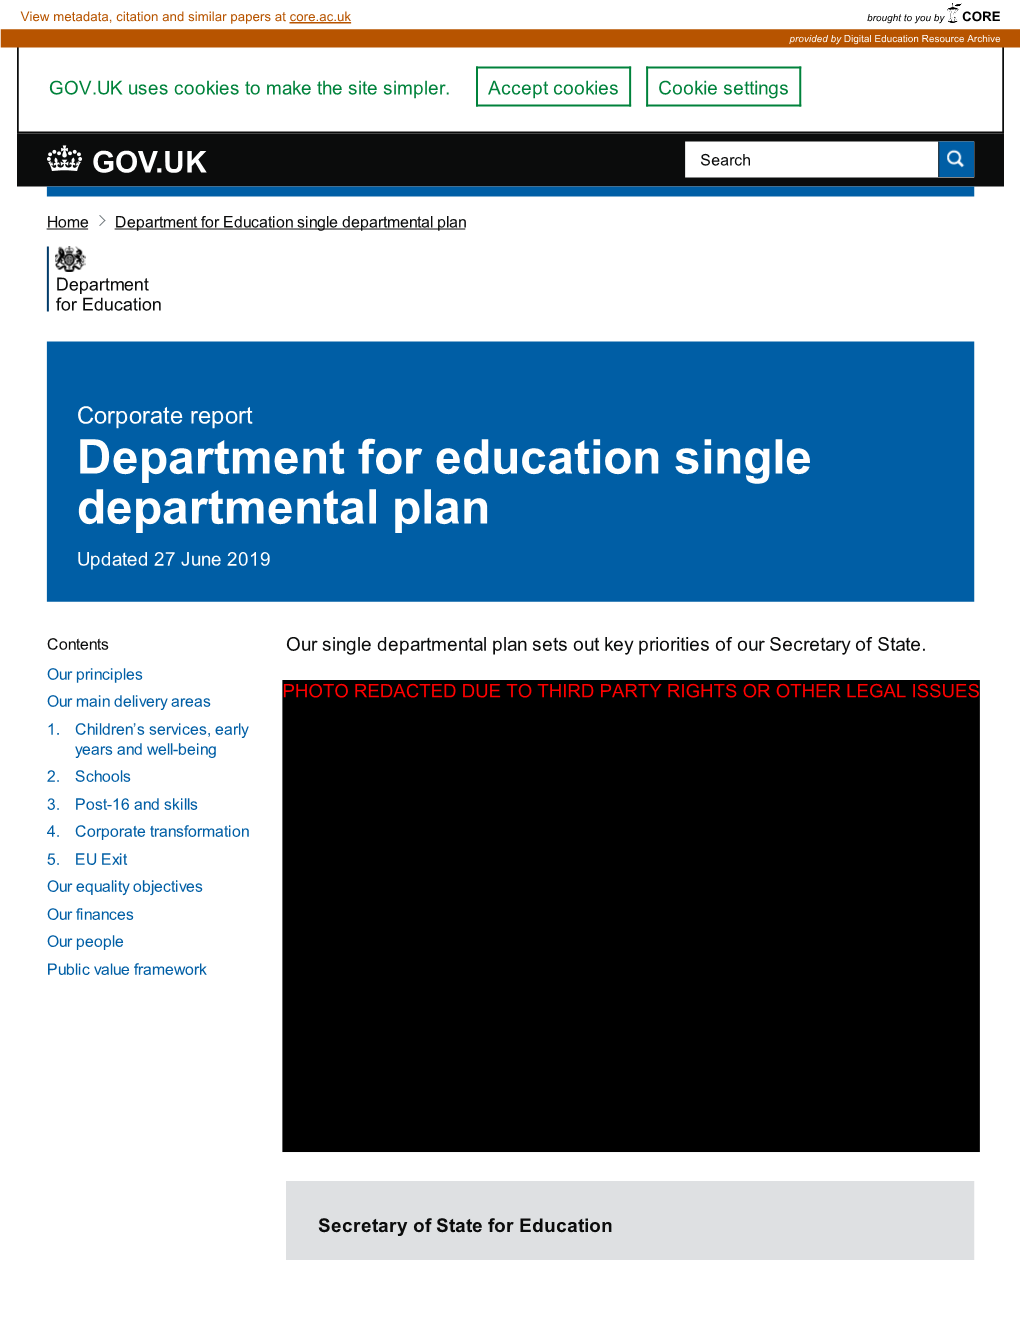 Department for Education Single Departmental Plan